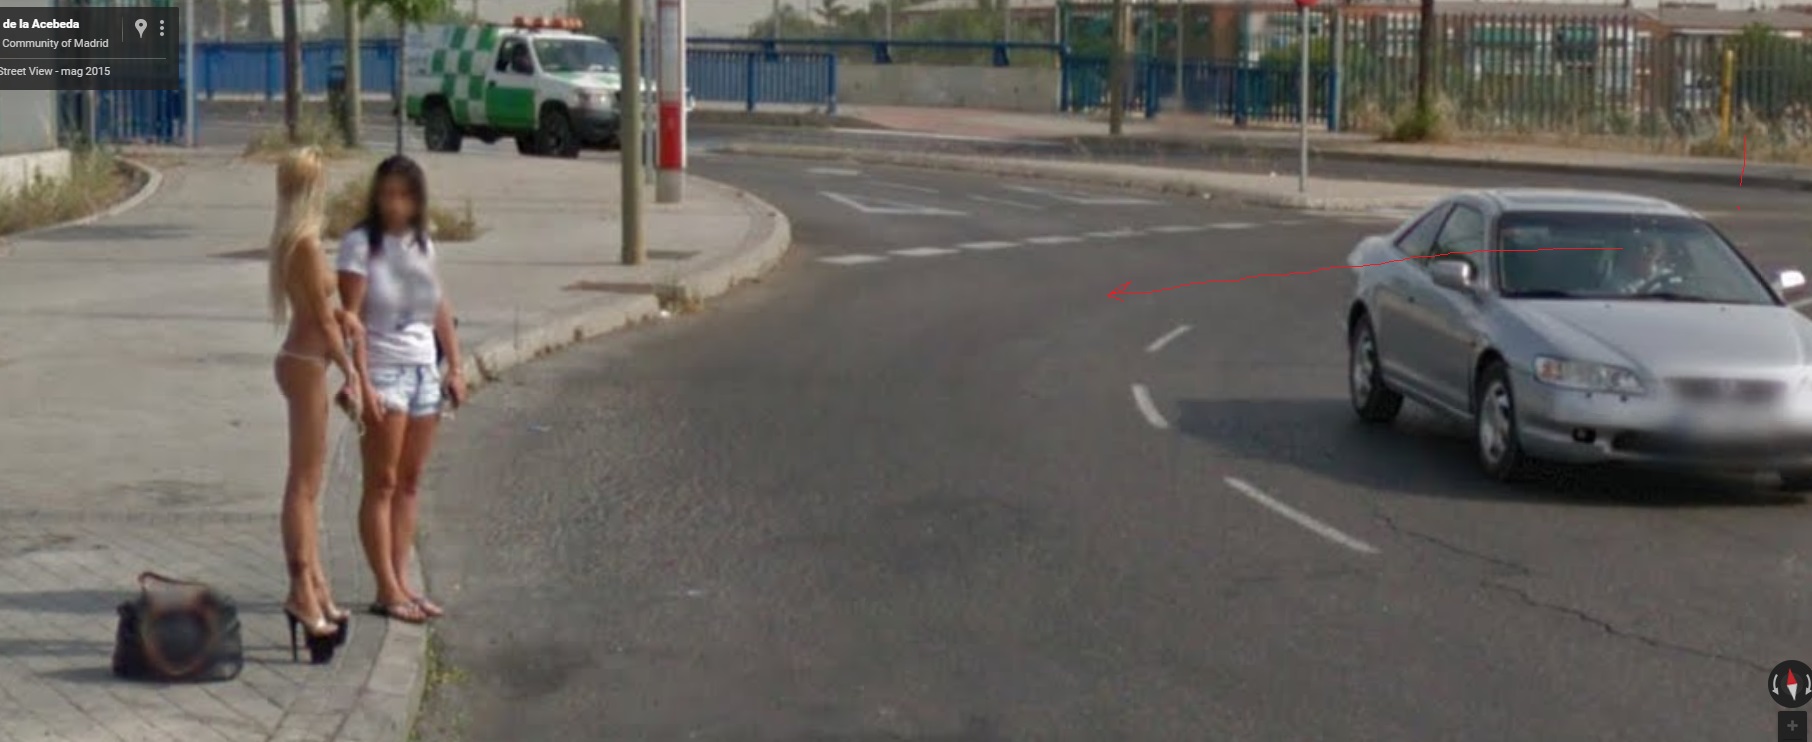 гугл карты москва просмотр улиц какой объем занимают 27 моль железа